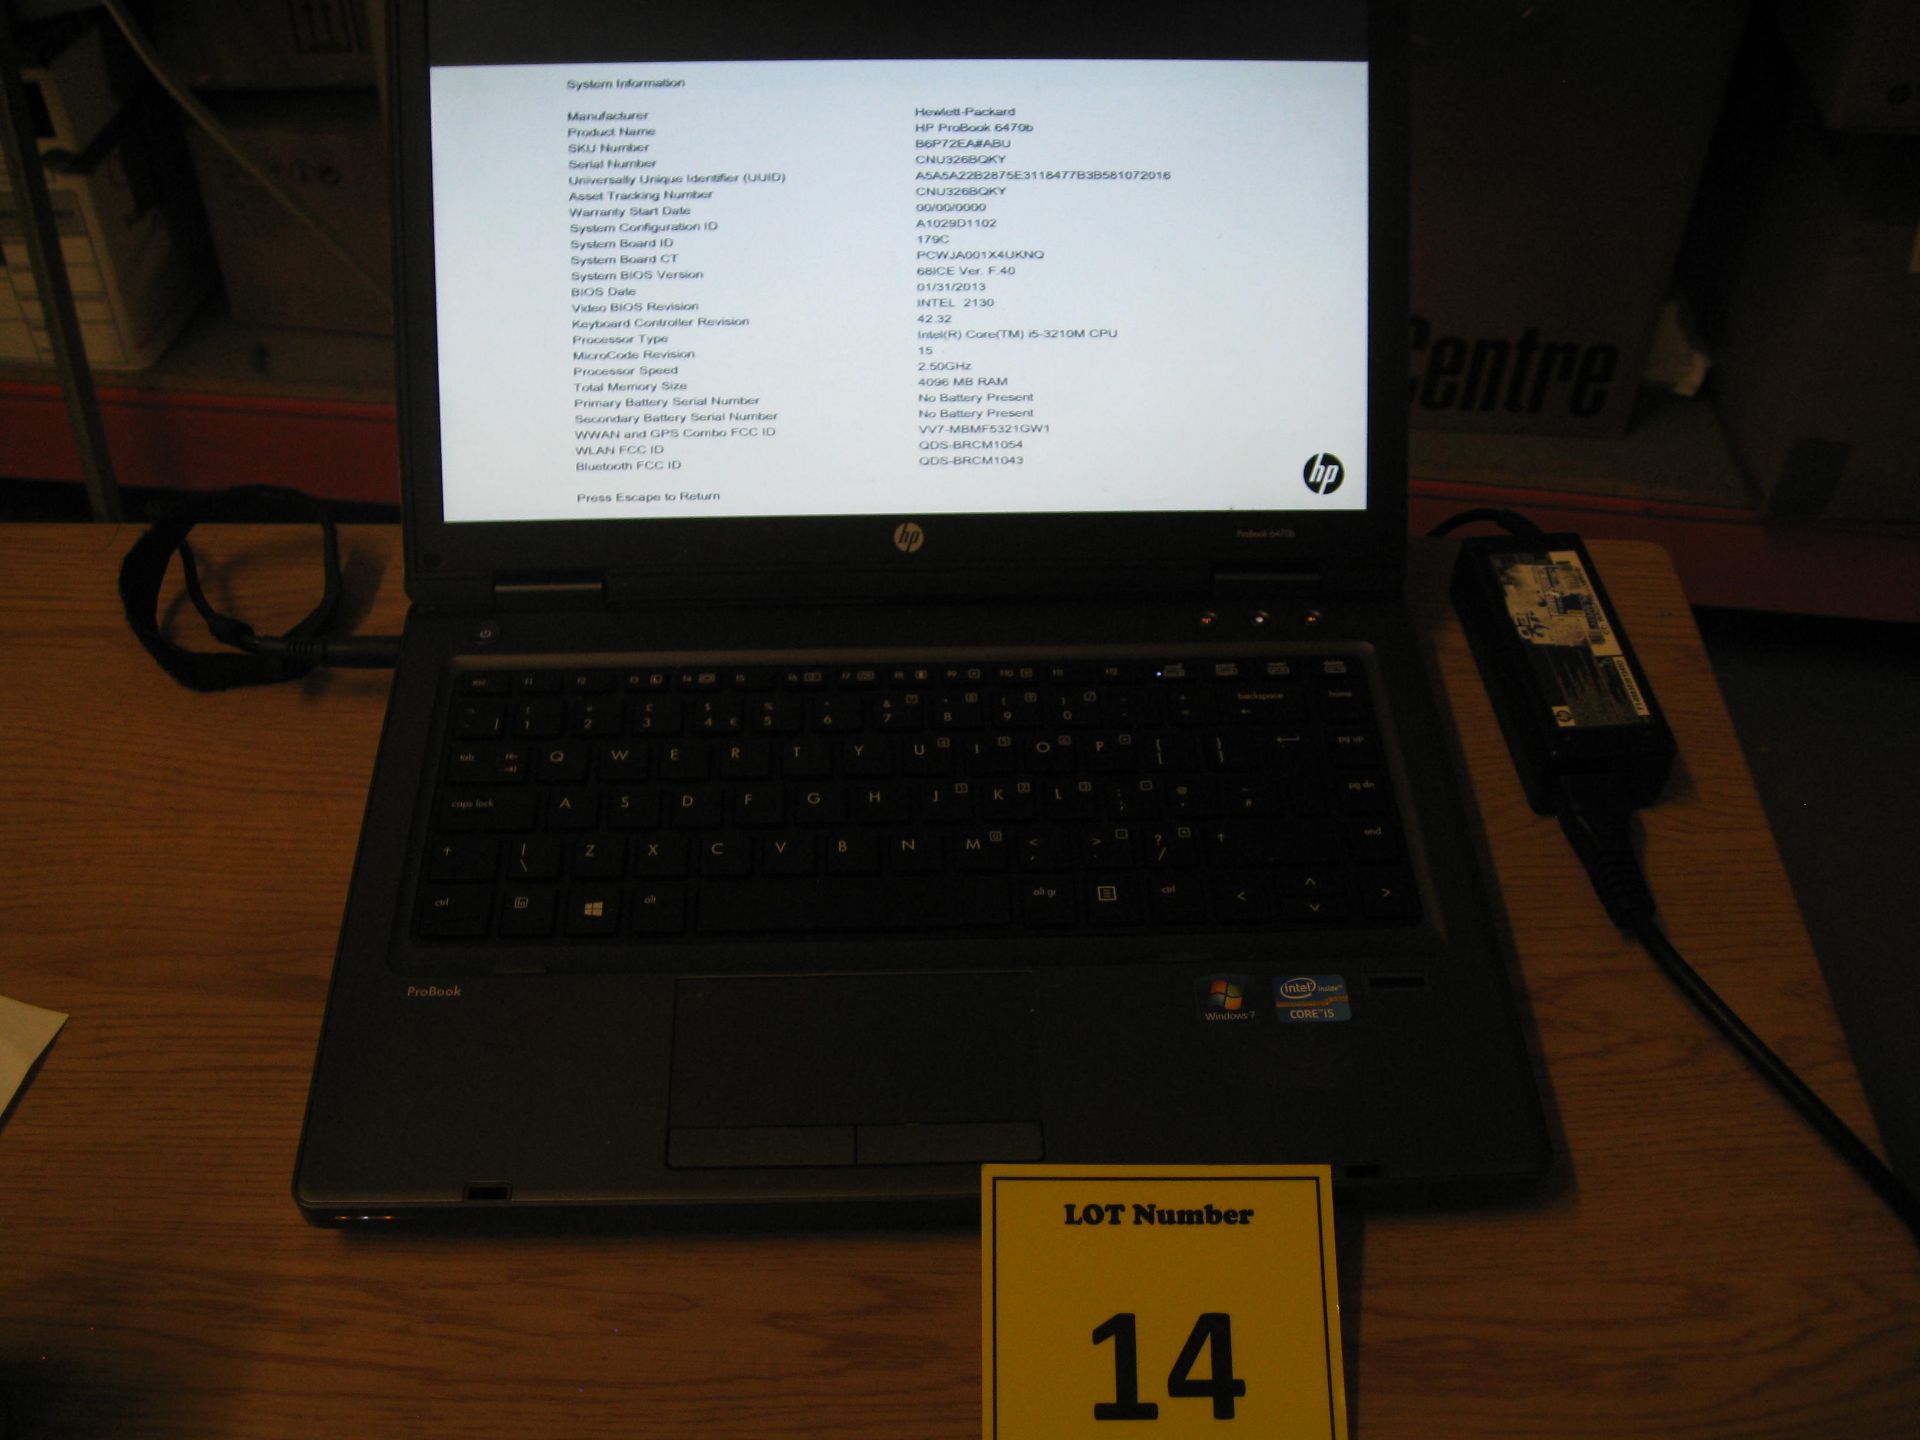 HP Probook 6470b Laptop, C-i5/2.50GHZ, 4GB RAM/320 GB HDD, dvdrw, psu - Win 7 Pro COA